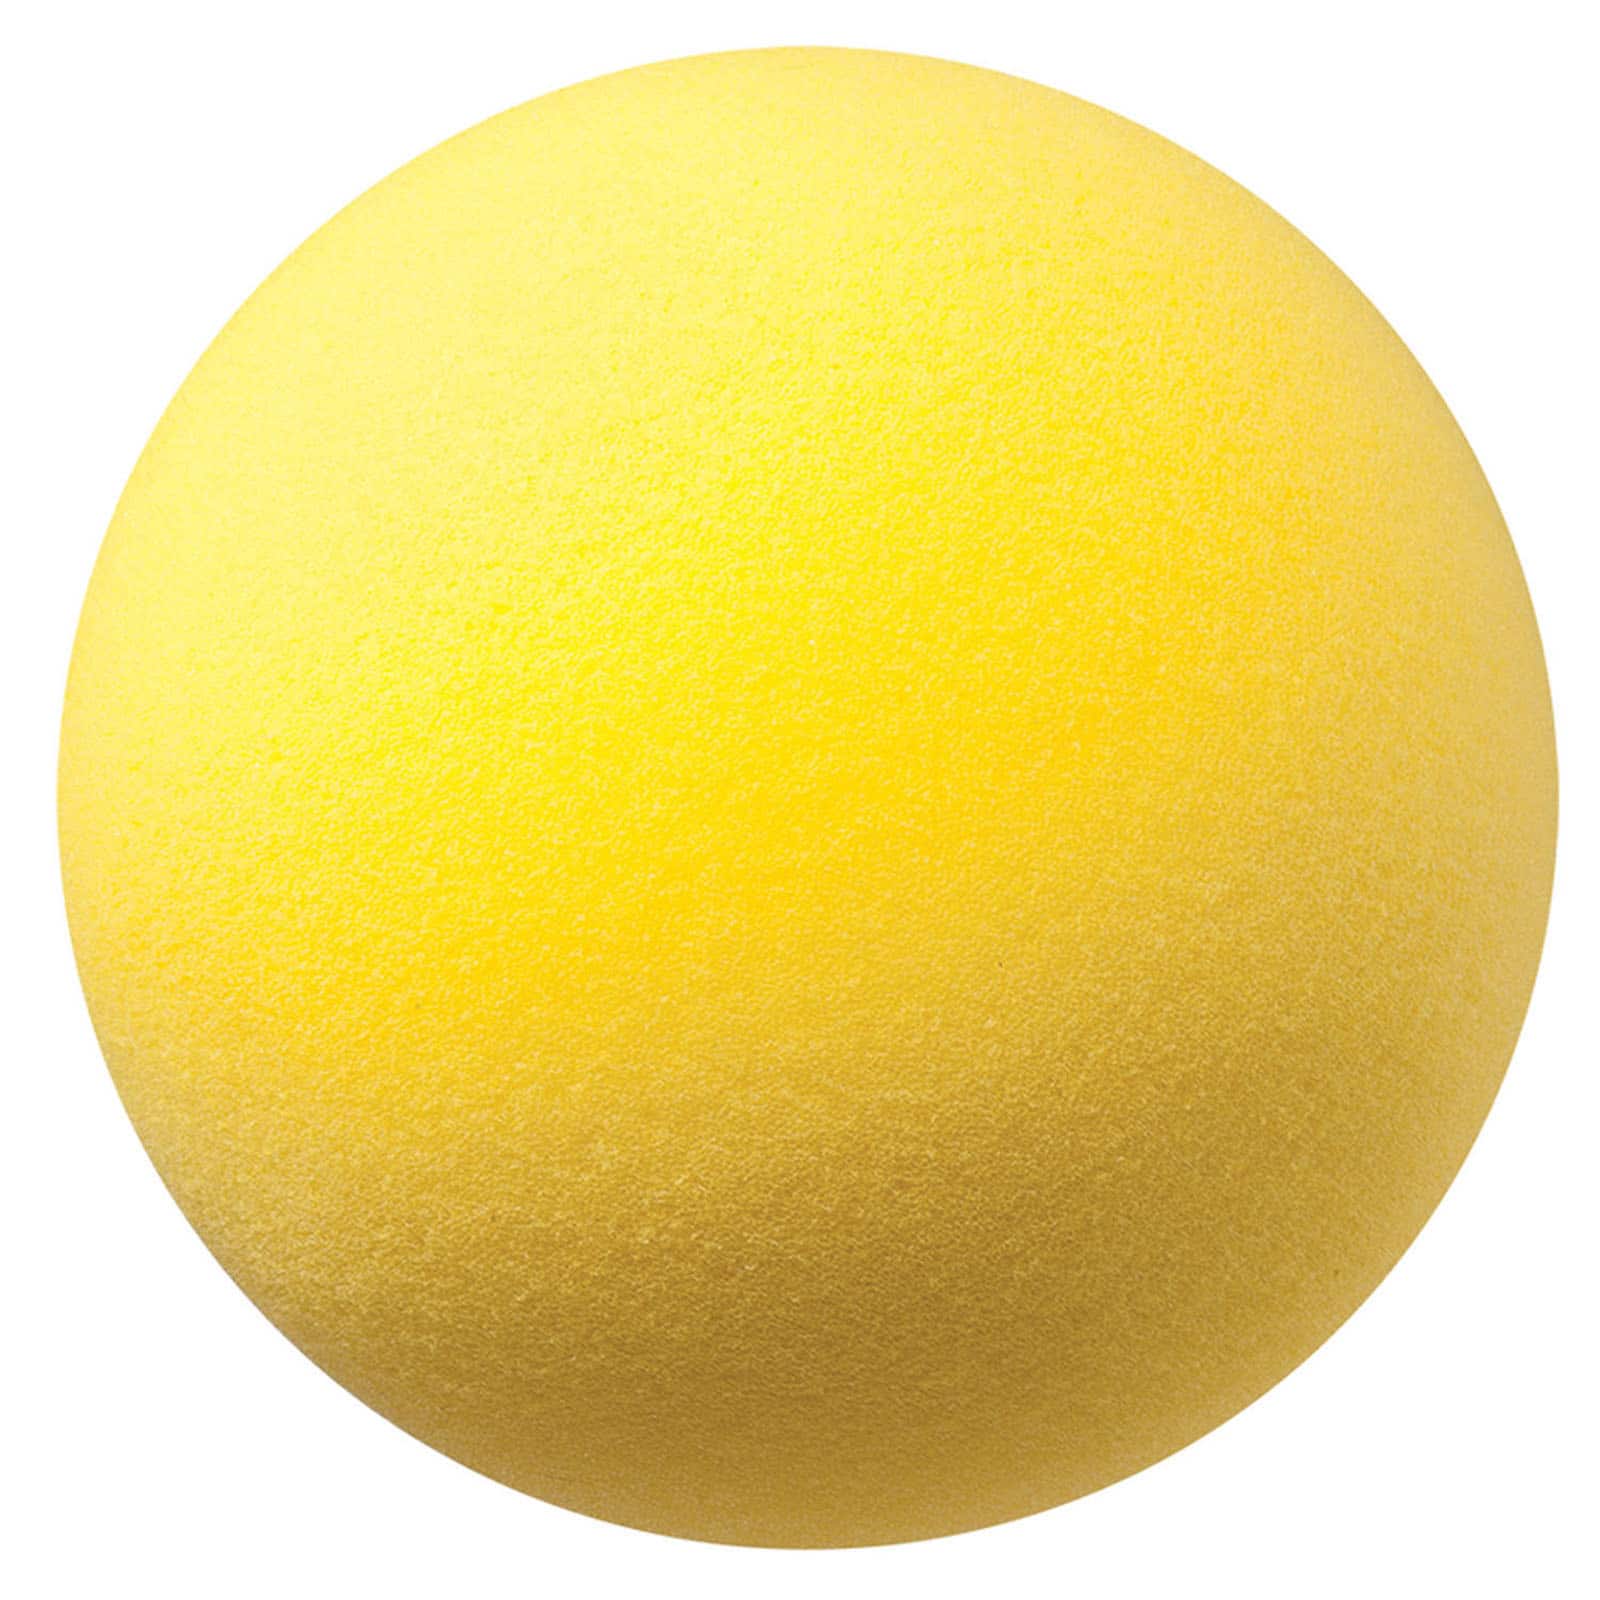 Champion Sports One-Star Table Tennis Balls, 144ct.